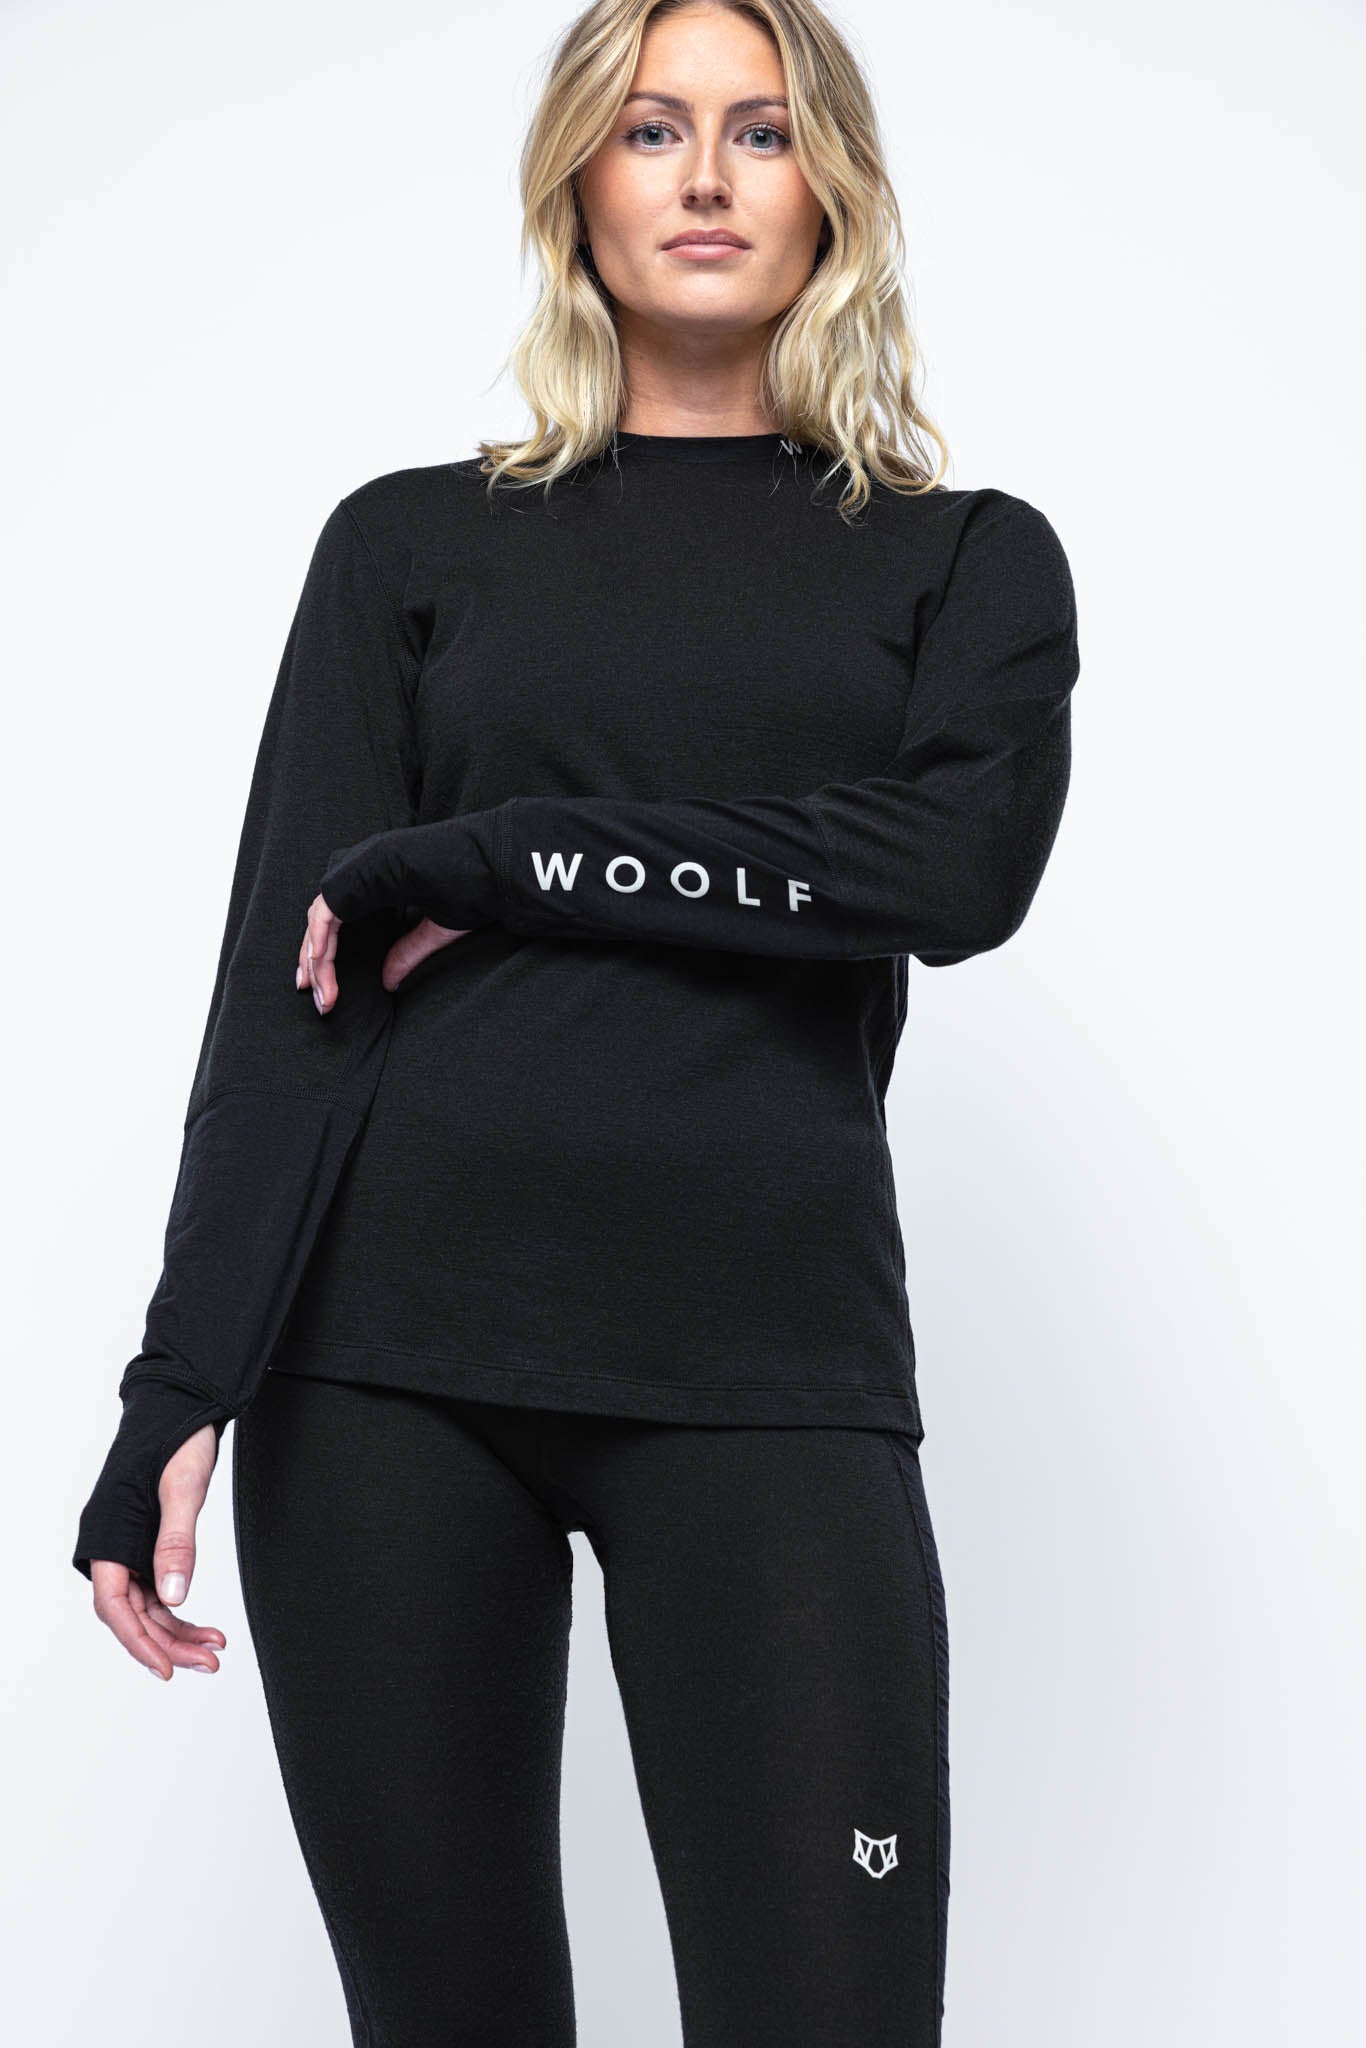 WoolCo. Merino Wool Base Layer Pants for Women